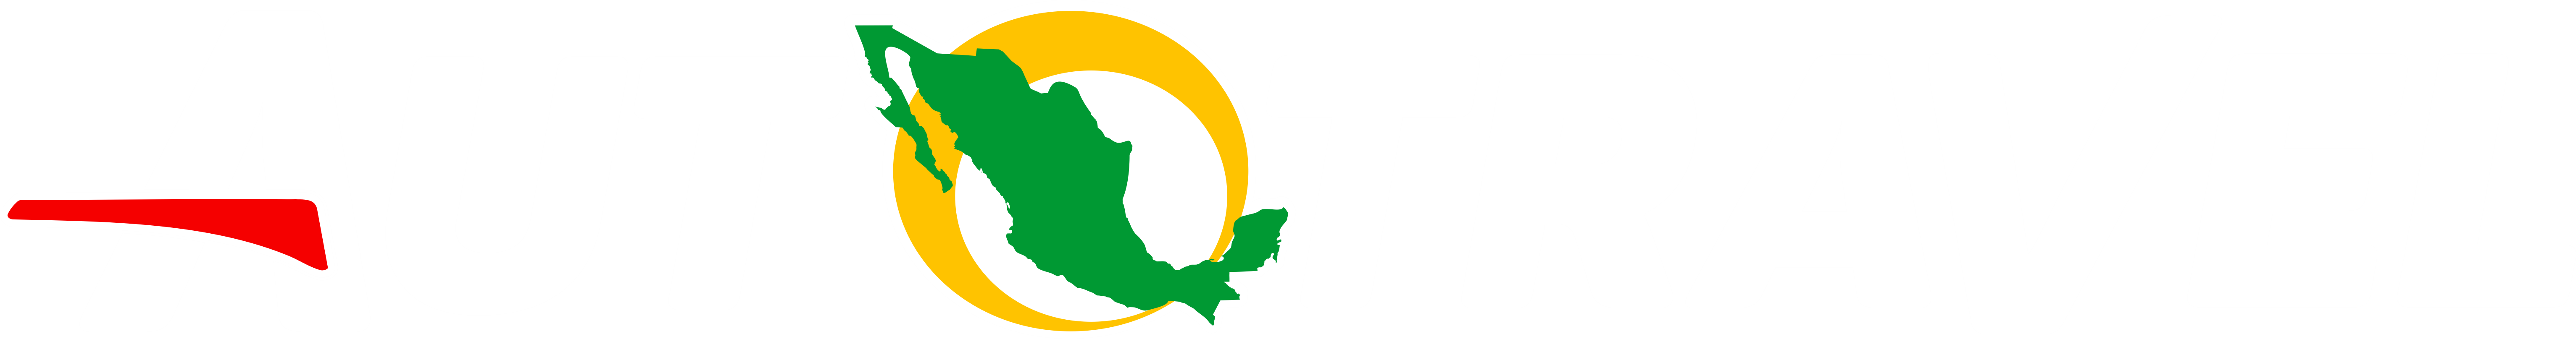 Autotravel_Logo_rojo2